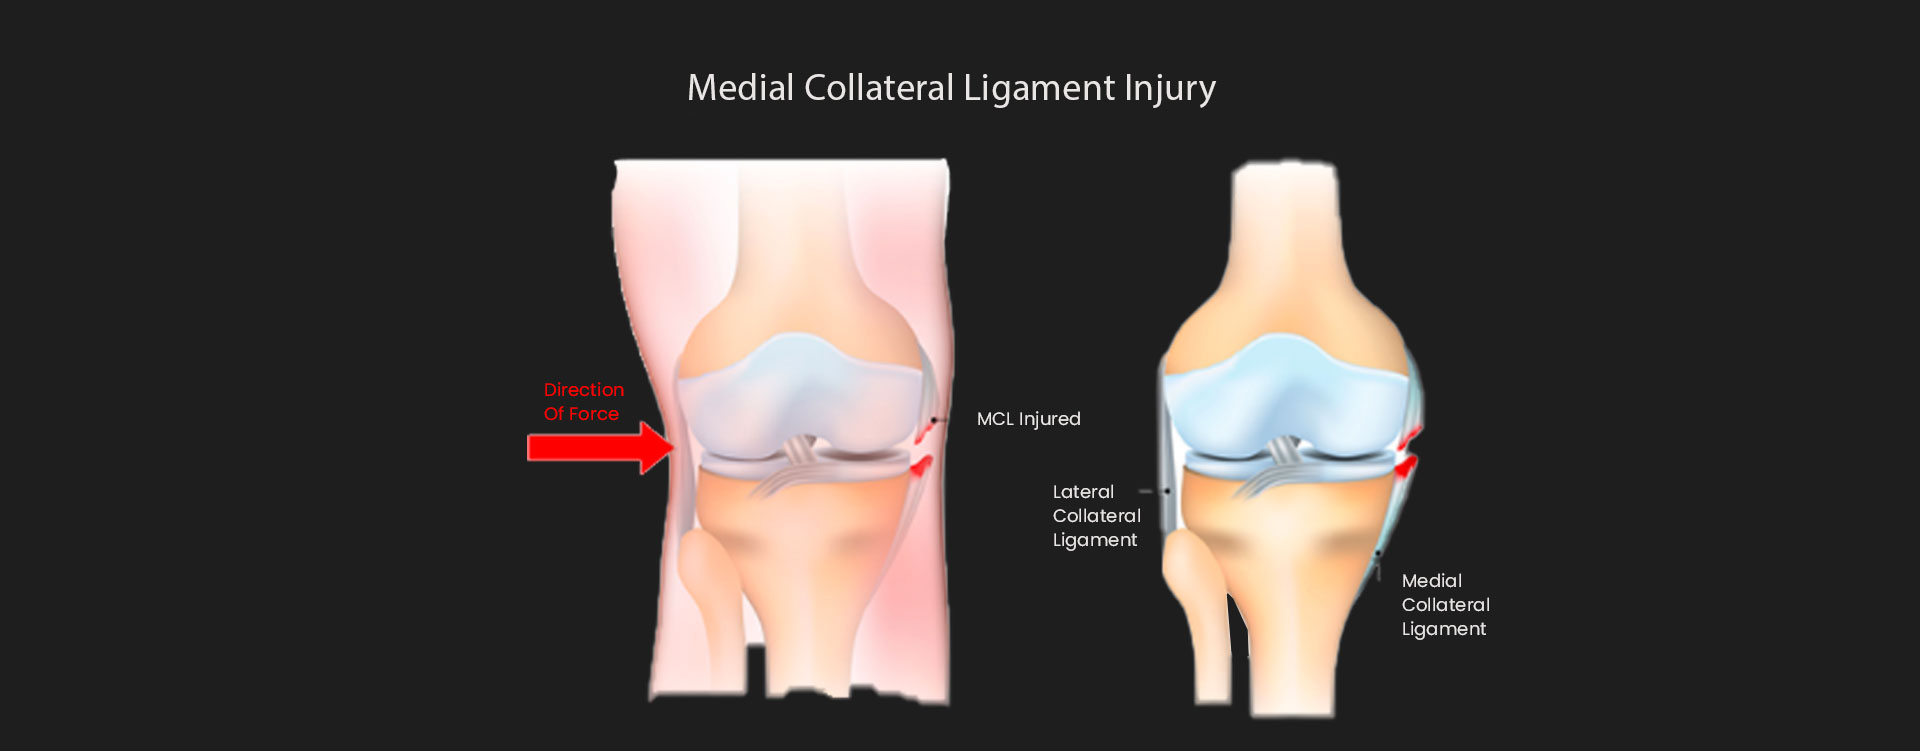 MCL-Injury